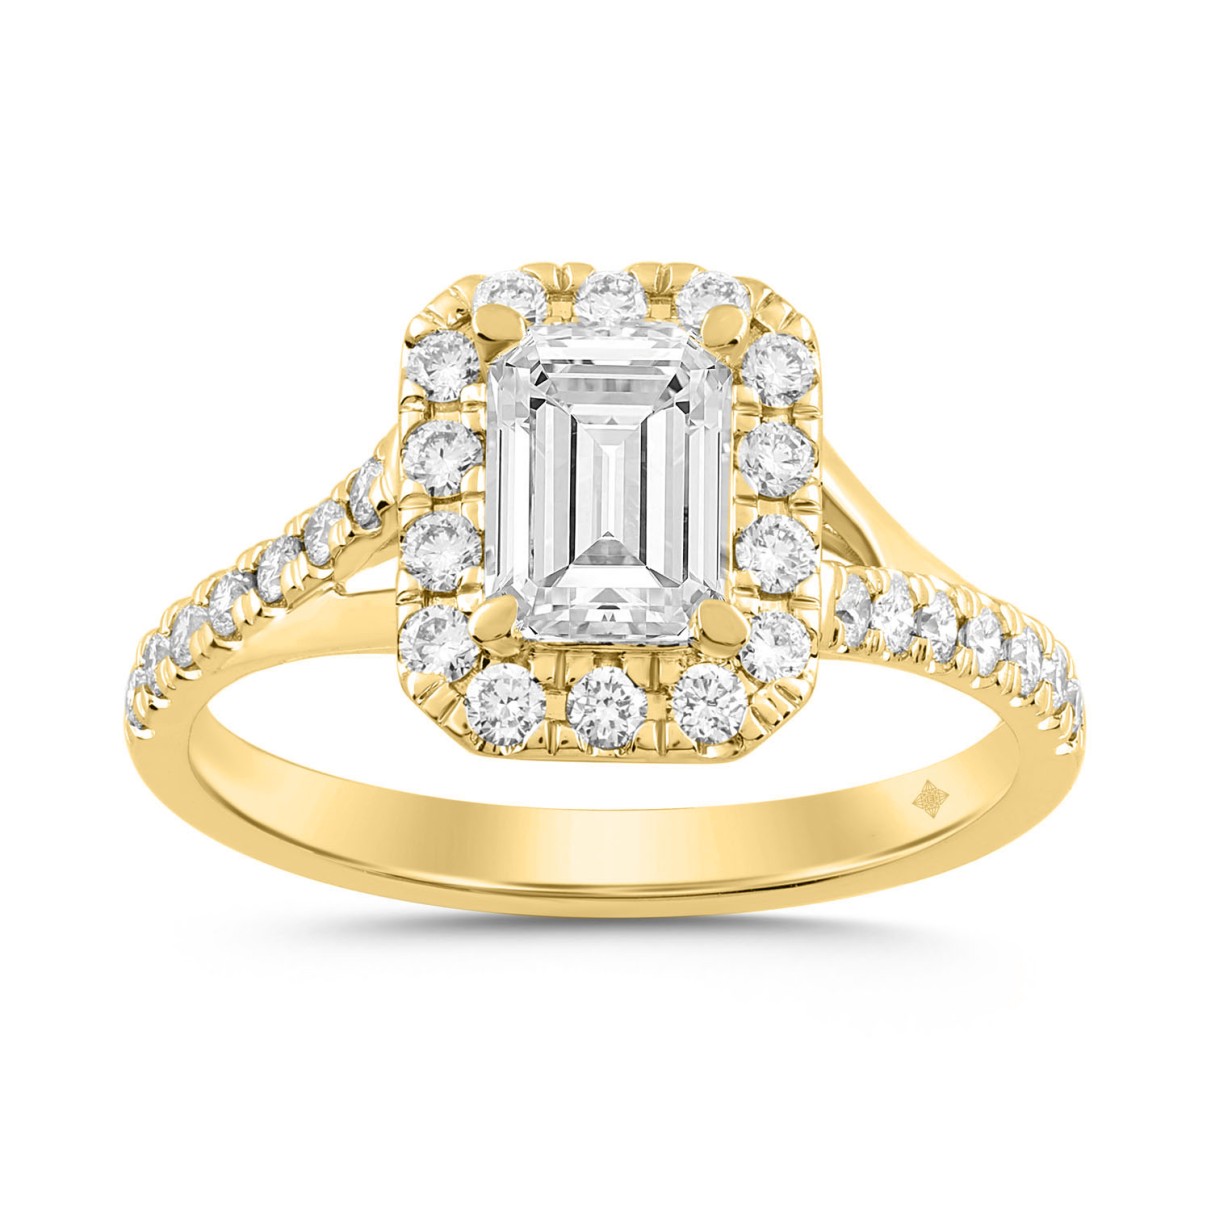 LADIES RING 1 1/2CT ROUND/EMERALD DIAMOND 14K YELLOW GOLD (CENTER STONE EMERALD DIAMOND 1CT)